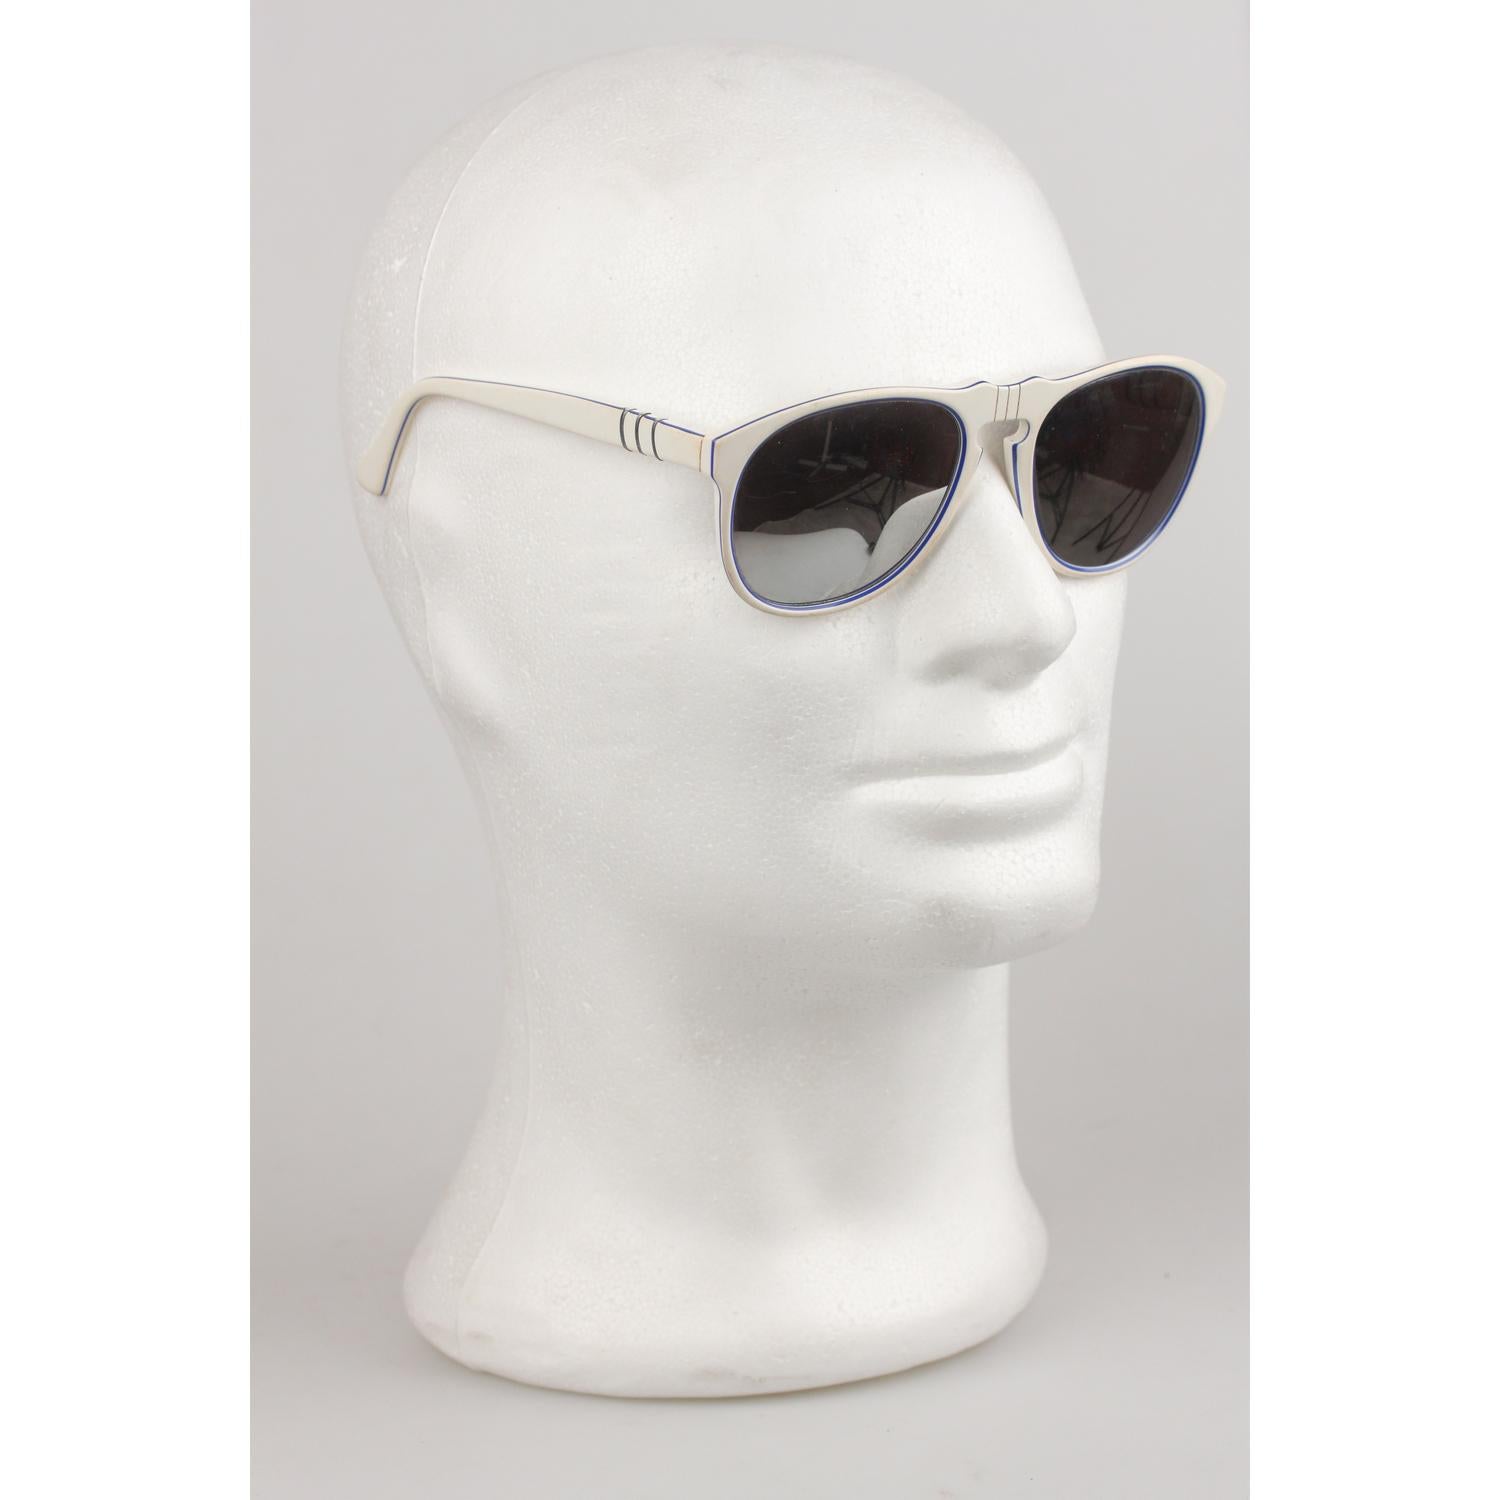 Persol Ratti Vintage White Sunglasses Mod. 649/3 Sport Mirrored Lens ...